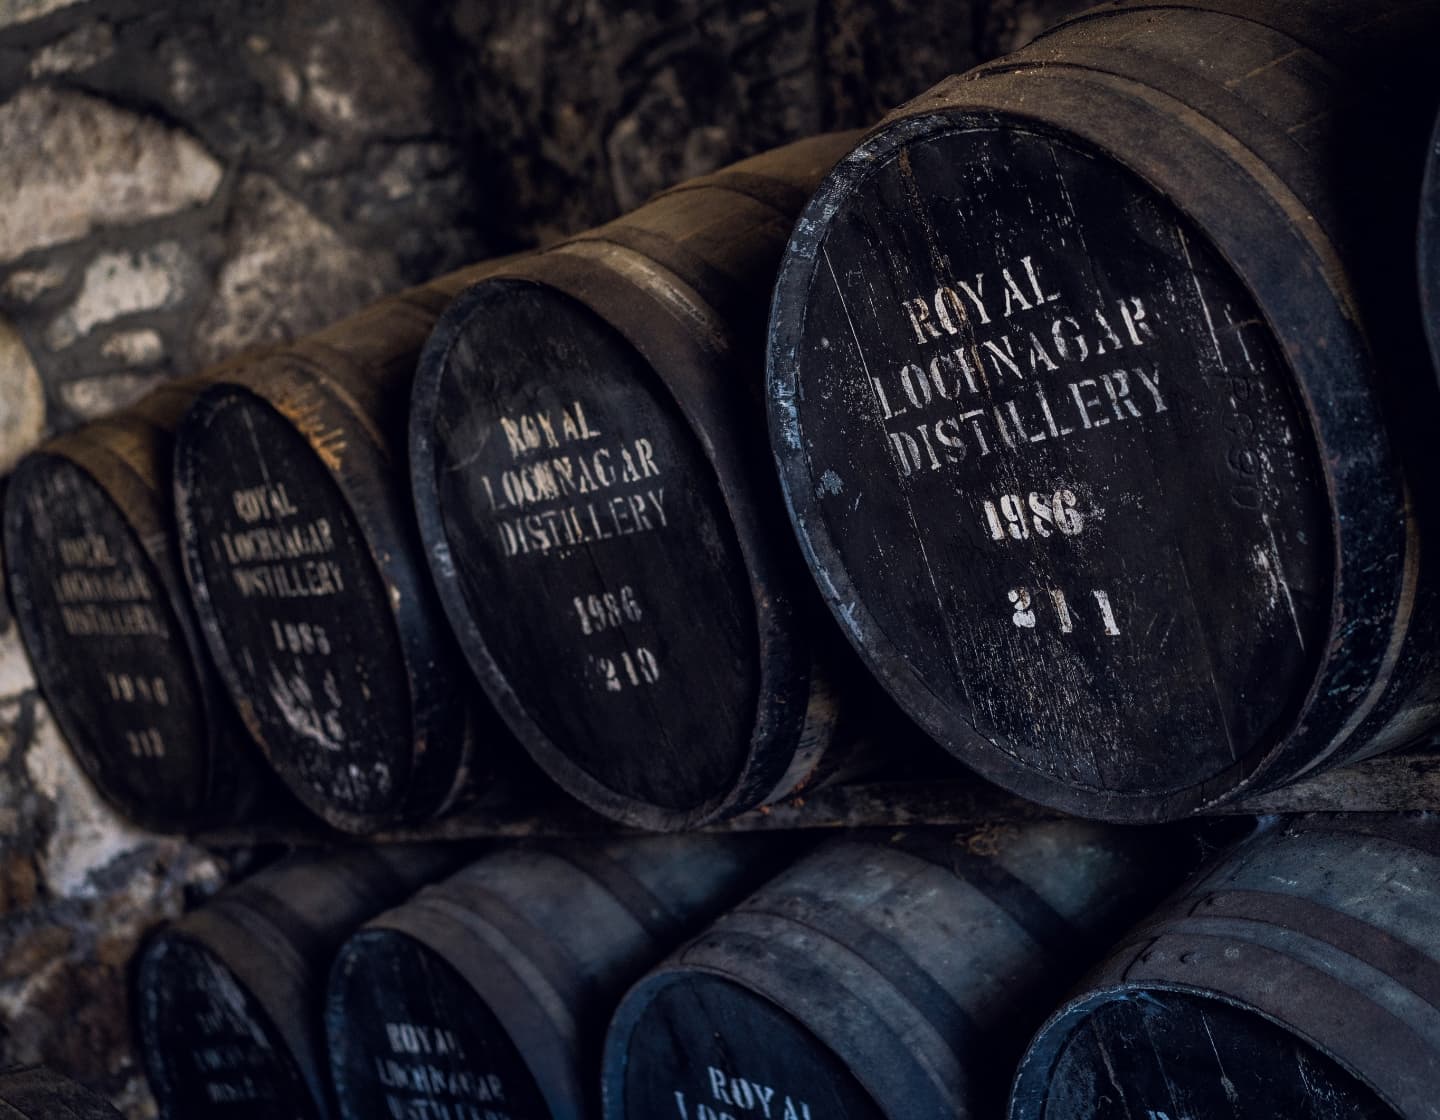 Scotch Whiskey barrels